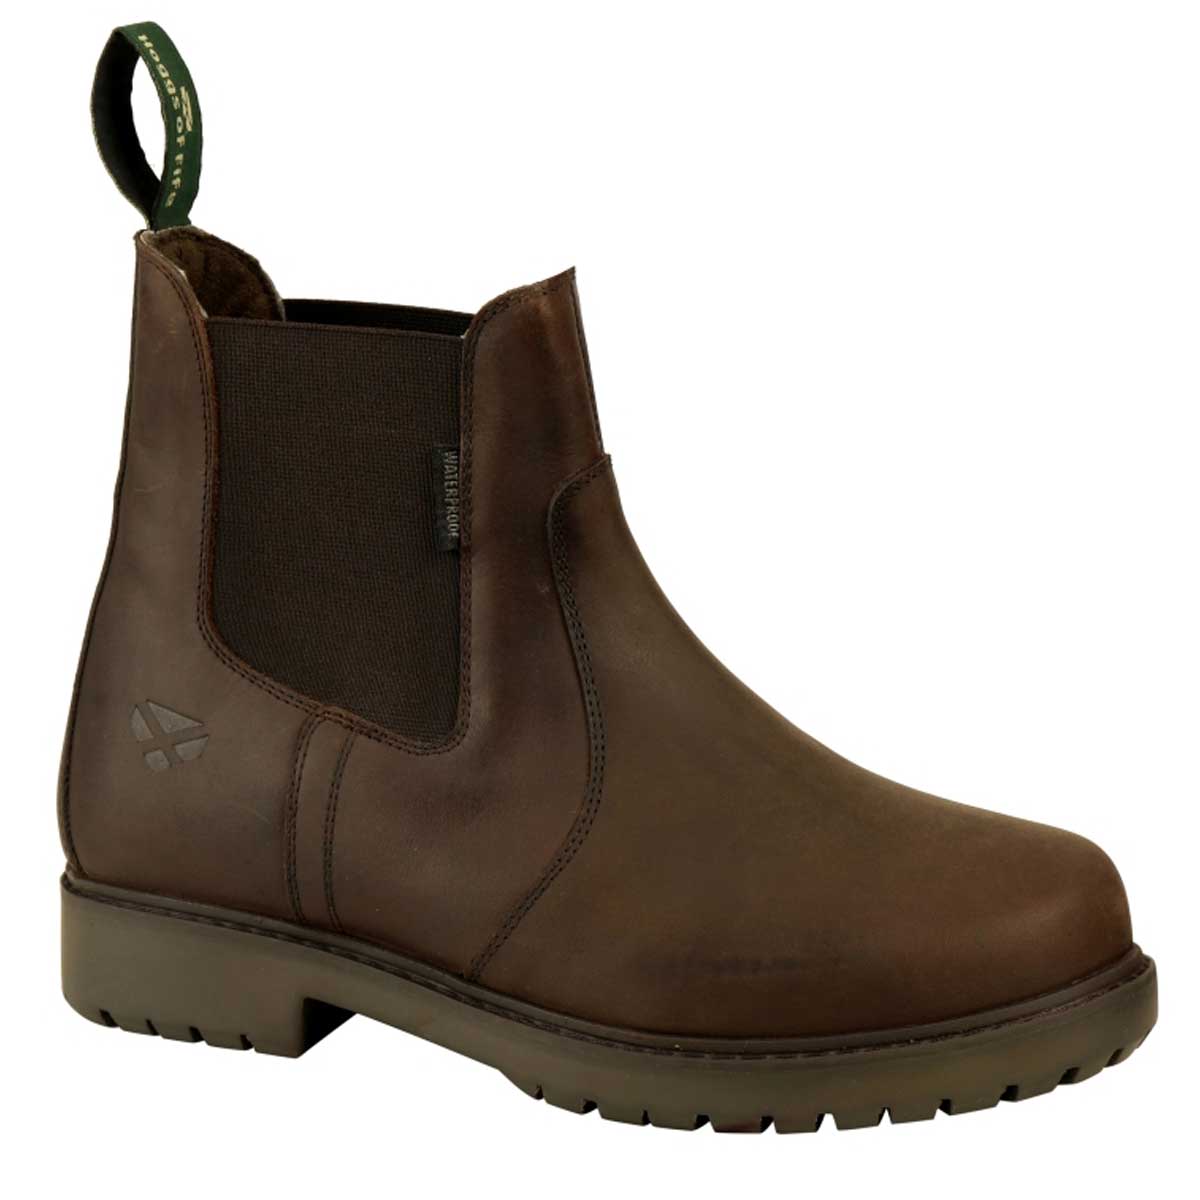 40% OFF HOGGS OF FIFE Ladies Northumberland II Dealer Boots - Brown -Size: UK 6.5 (EU 40)